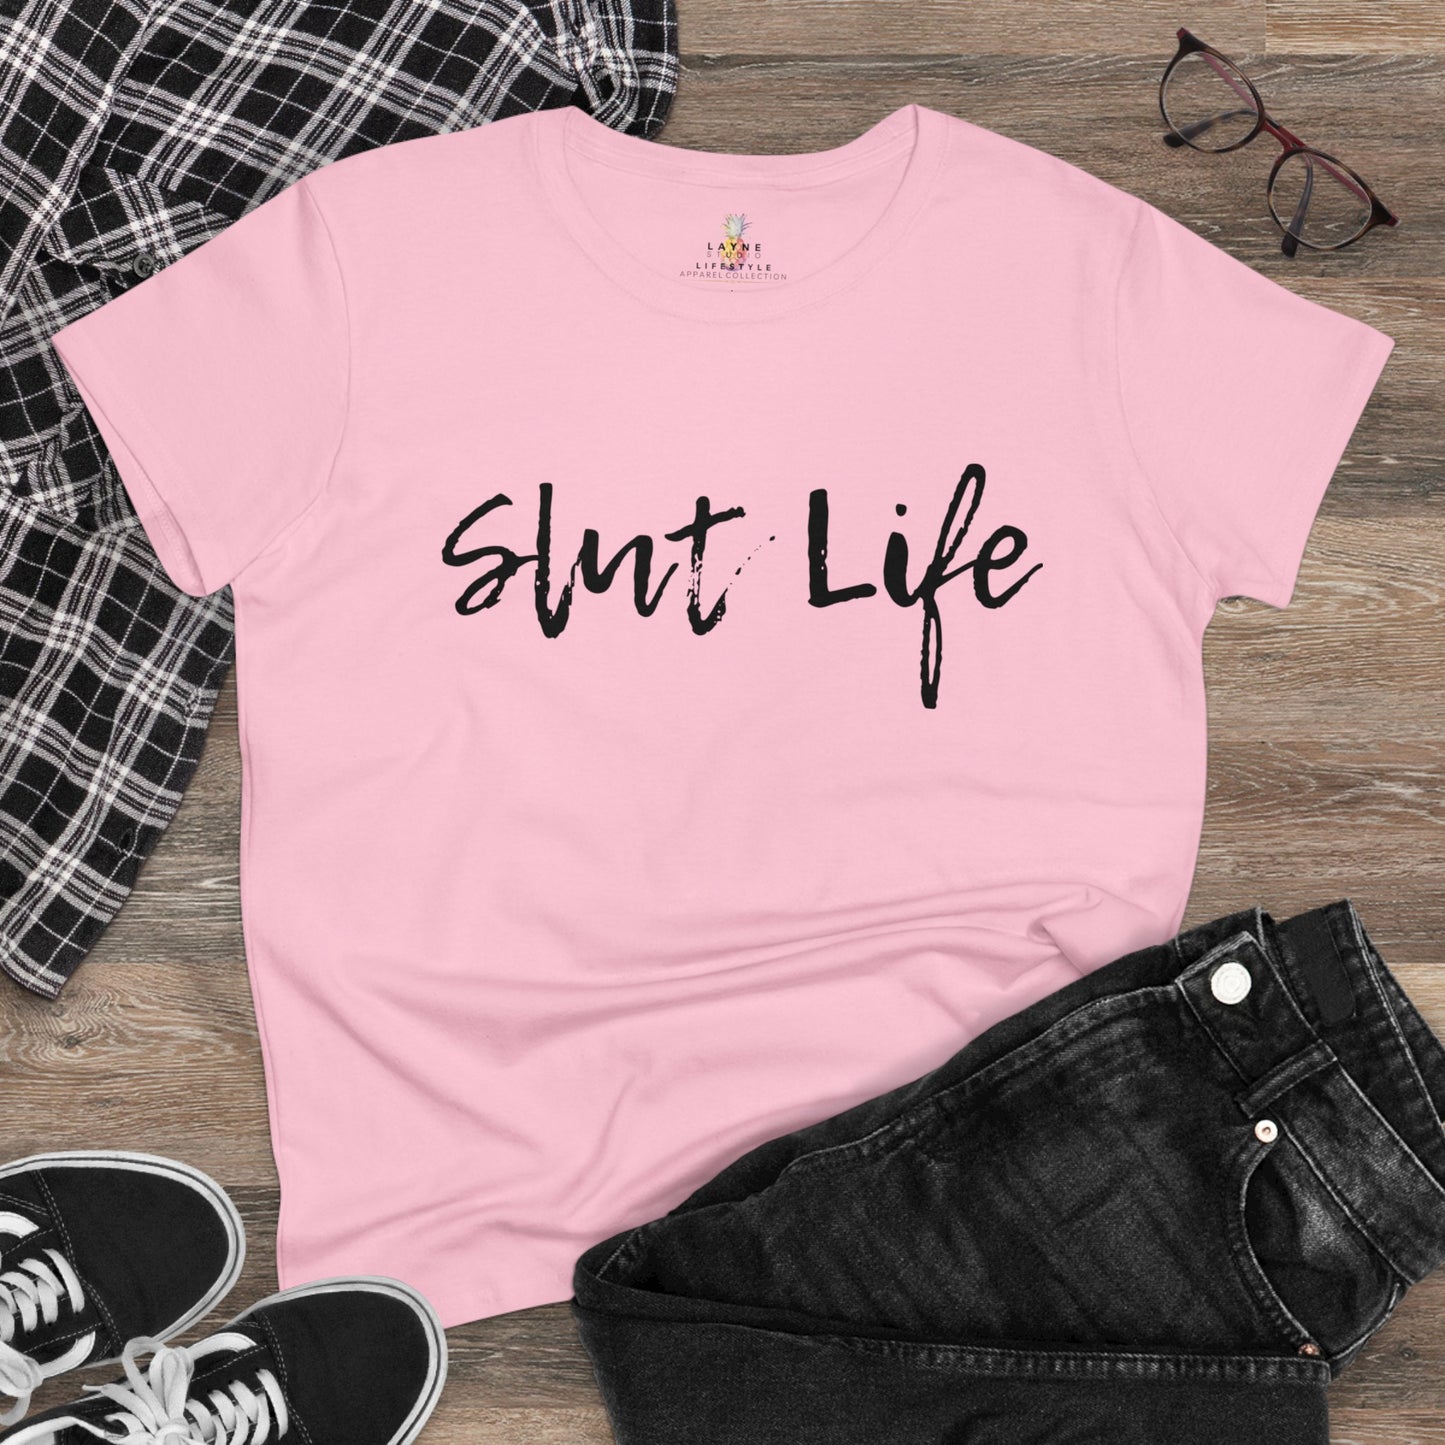 "Slut Life" (Salt Life Parody) Graphic Women's Midweight Cotton Tee